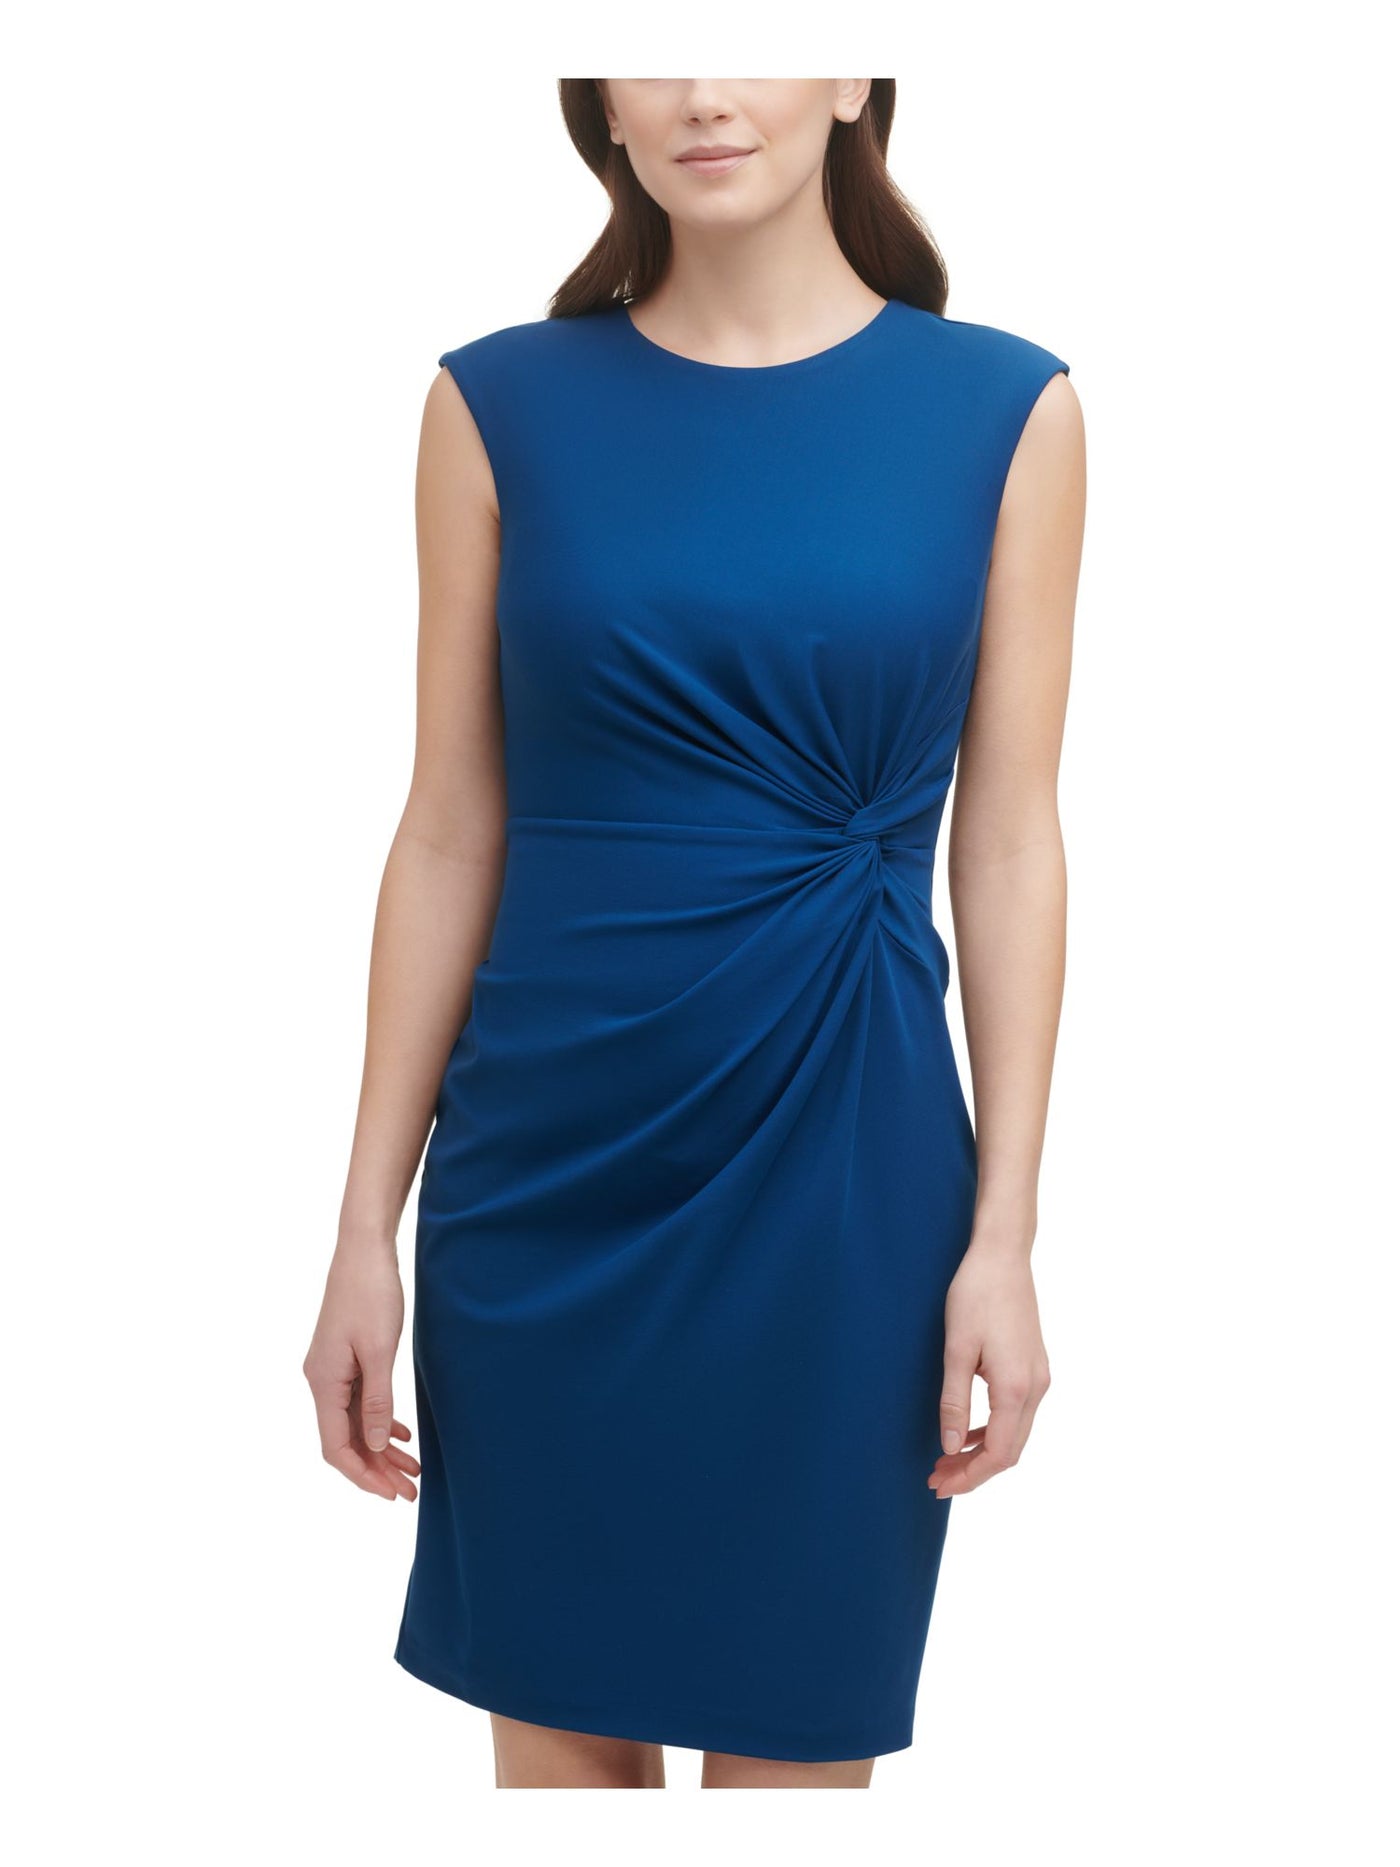 DKNY Womens Blue Zippered Side-knot Sleeveless Round Neck Above The Knee Cocktail Sheath Dress 14